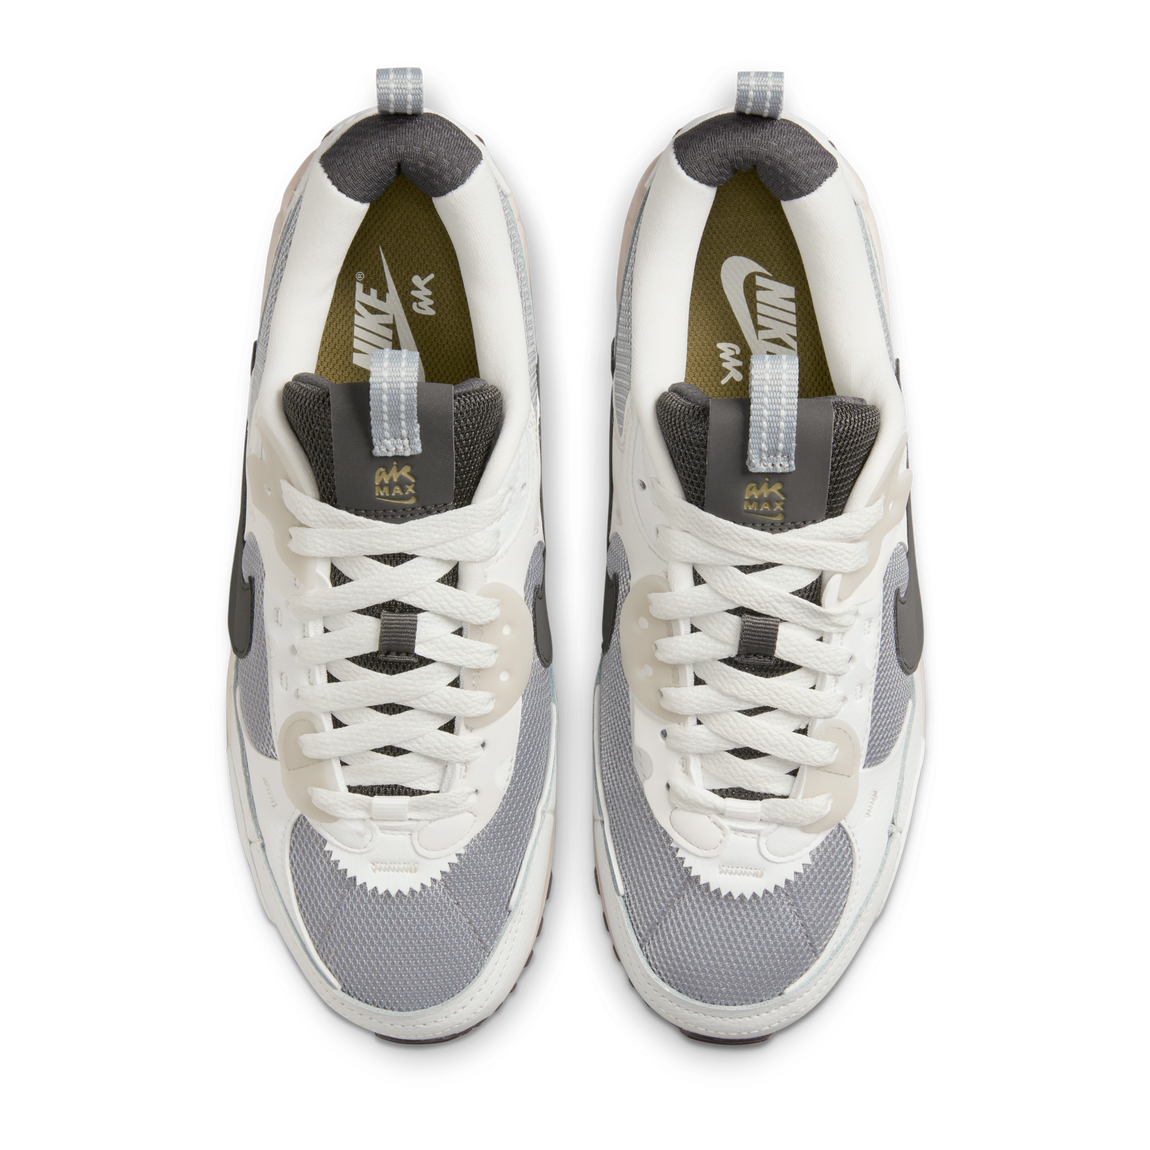 Nike Women's Air Max 90 Futura (Wolf Grey/Medium Ash-Summit White) - Nike Women's Air Max 90 Futura (Wolf Grey/Medium Ash-Summit White) - 